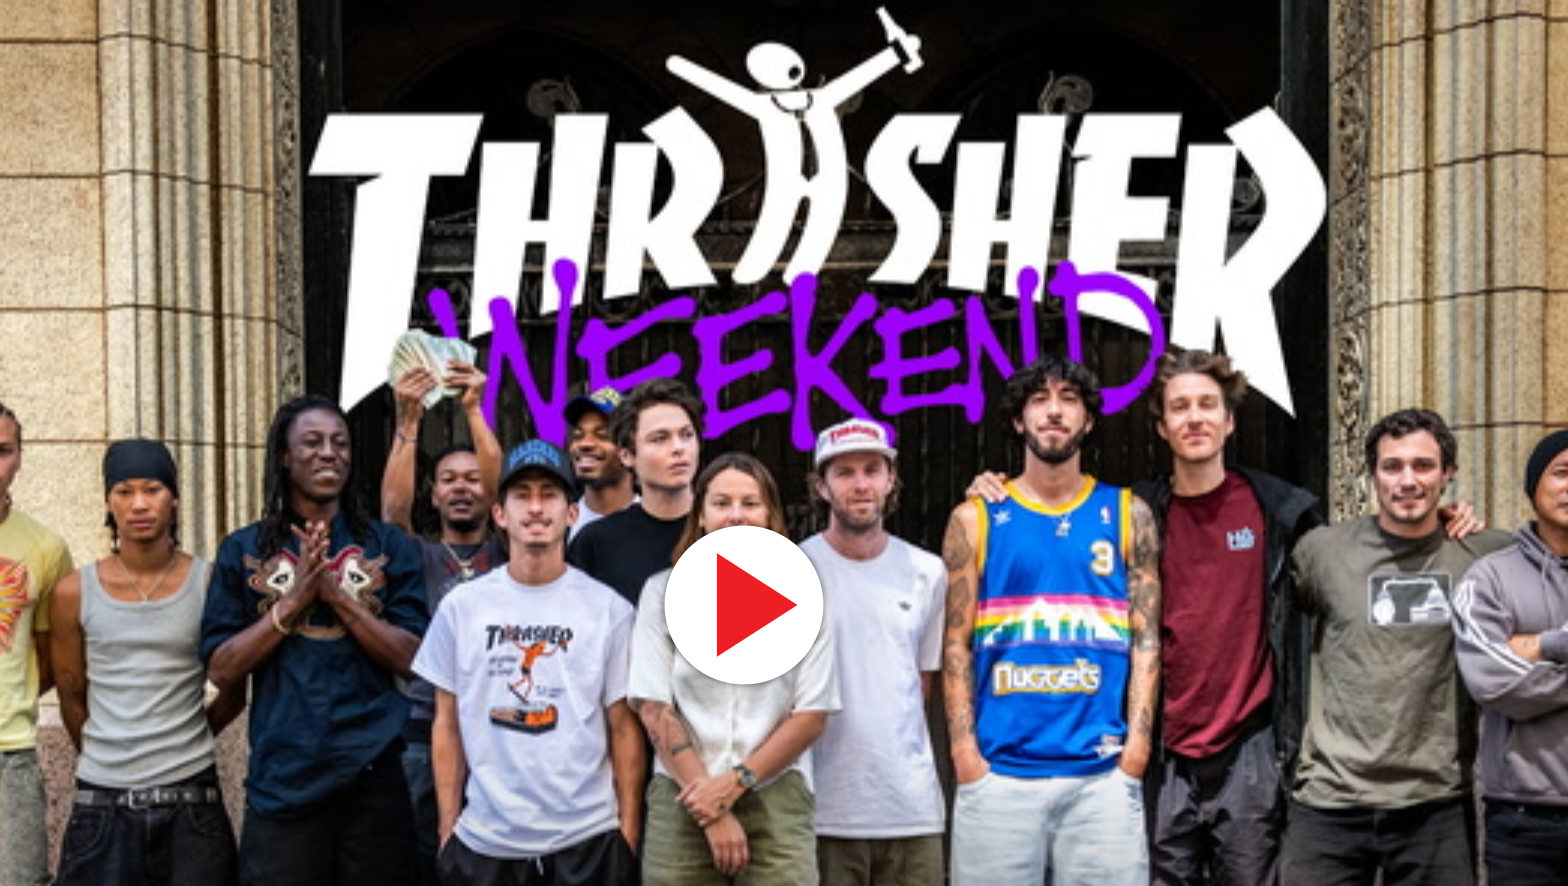 Thrasher Weekend: Adidas in Denver